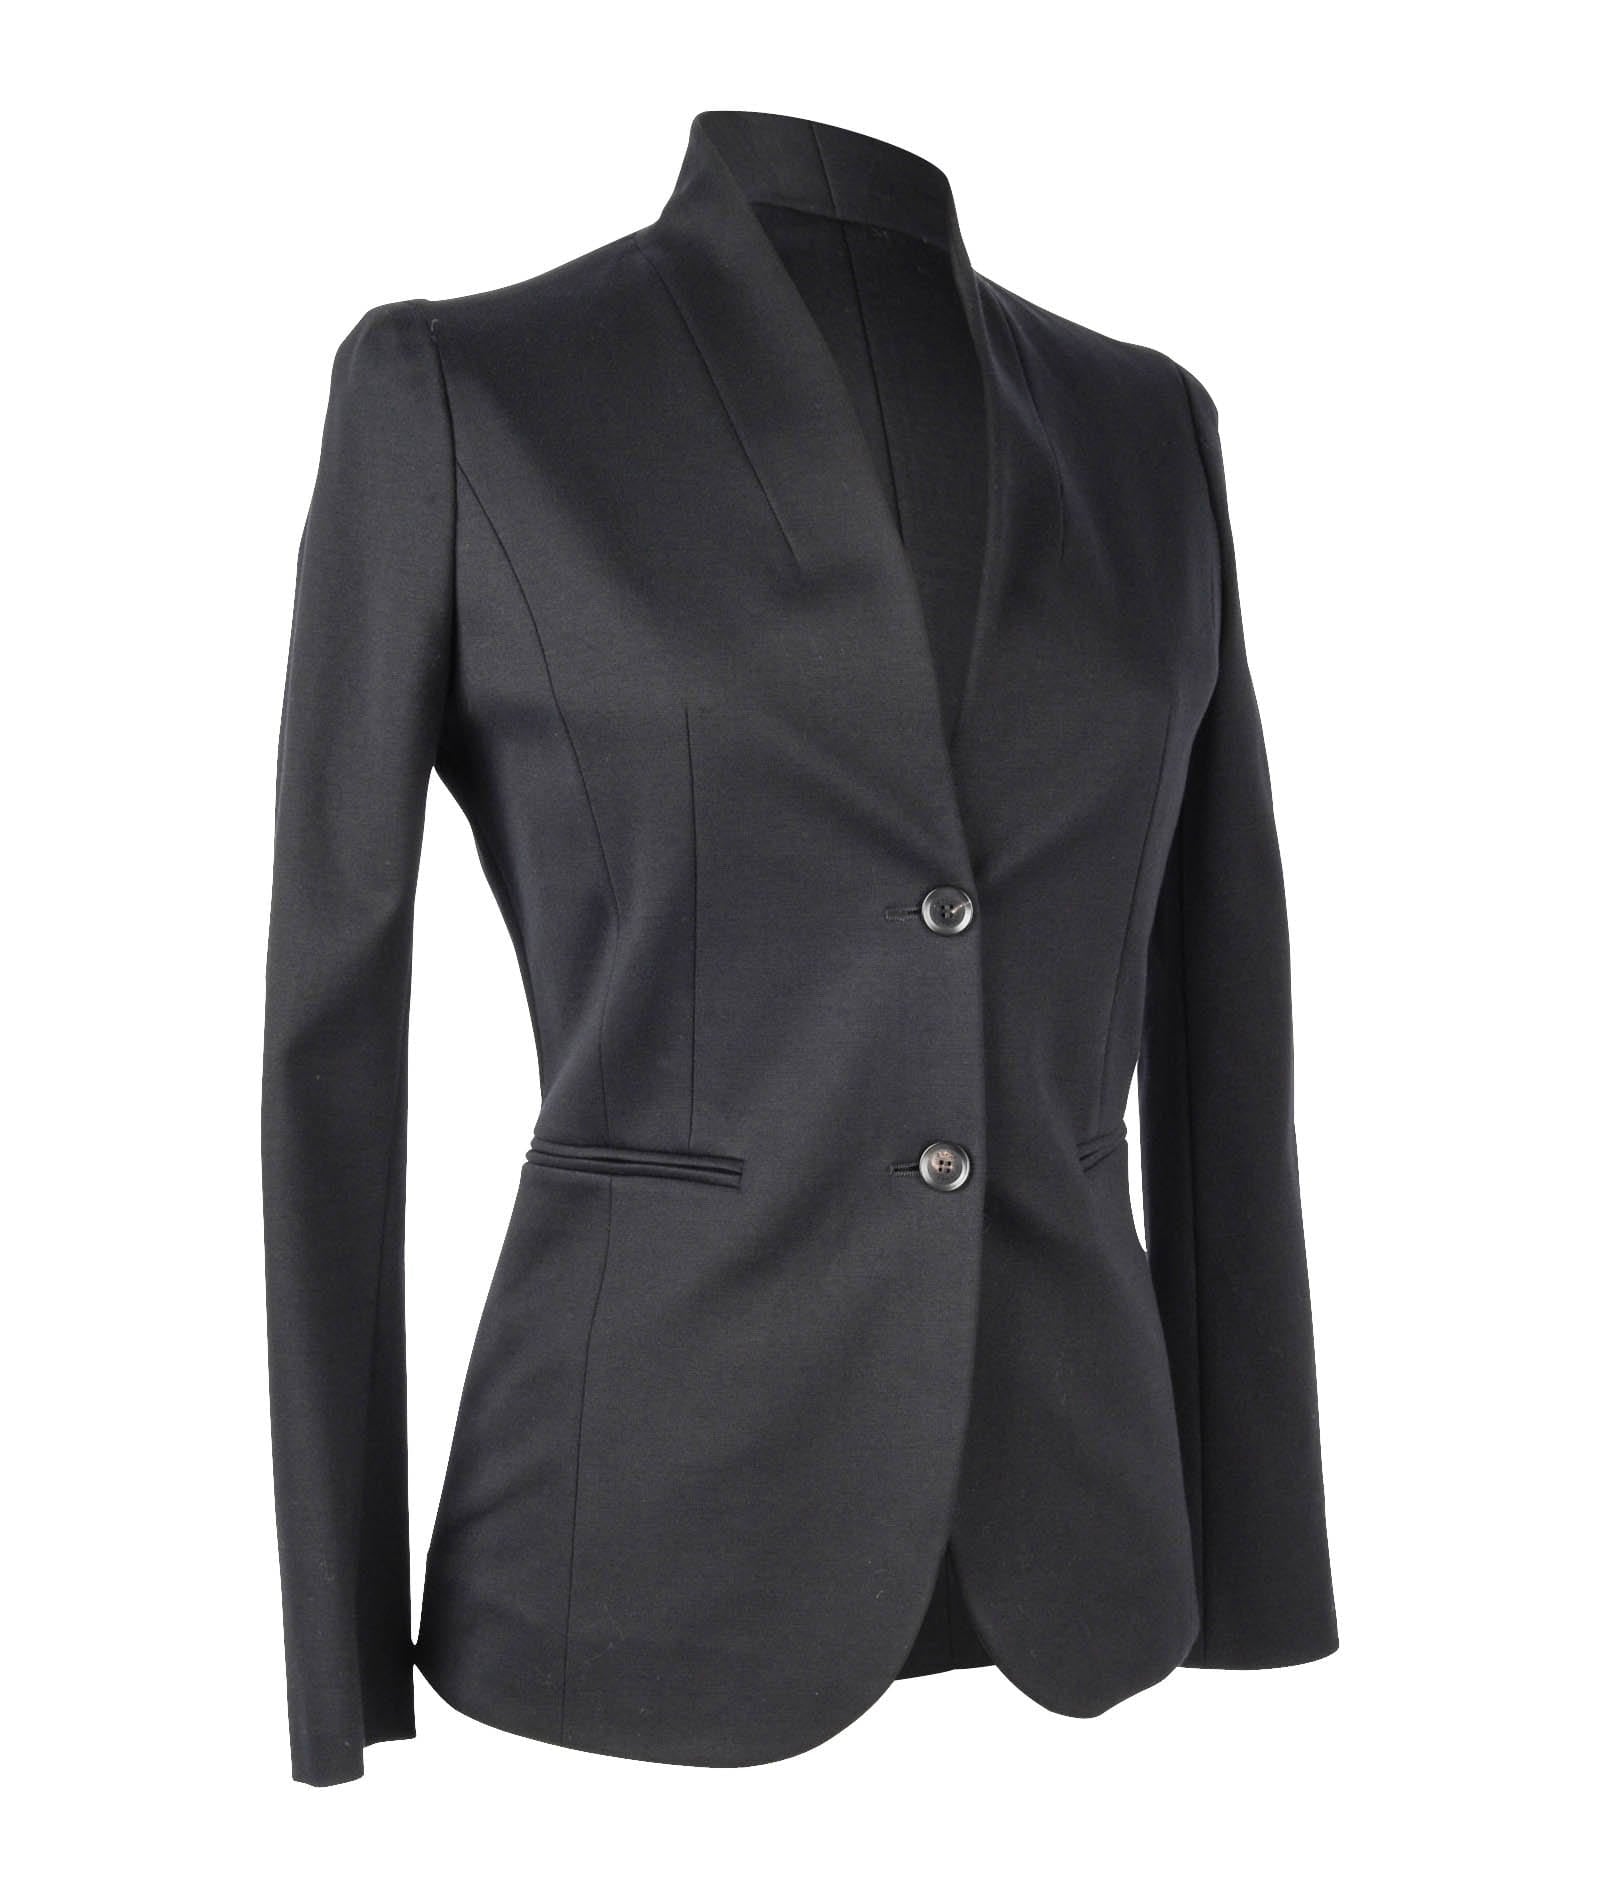 Gucci Jacket Modern Sleek Black Single Breast 38 / 6